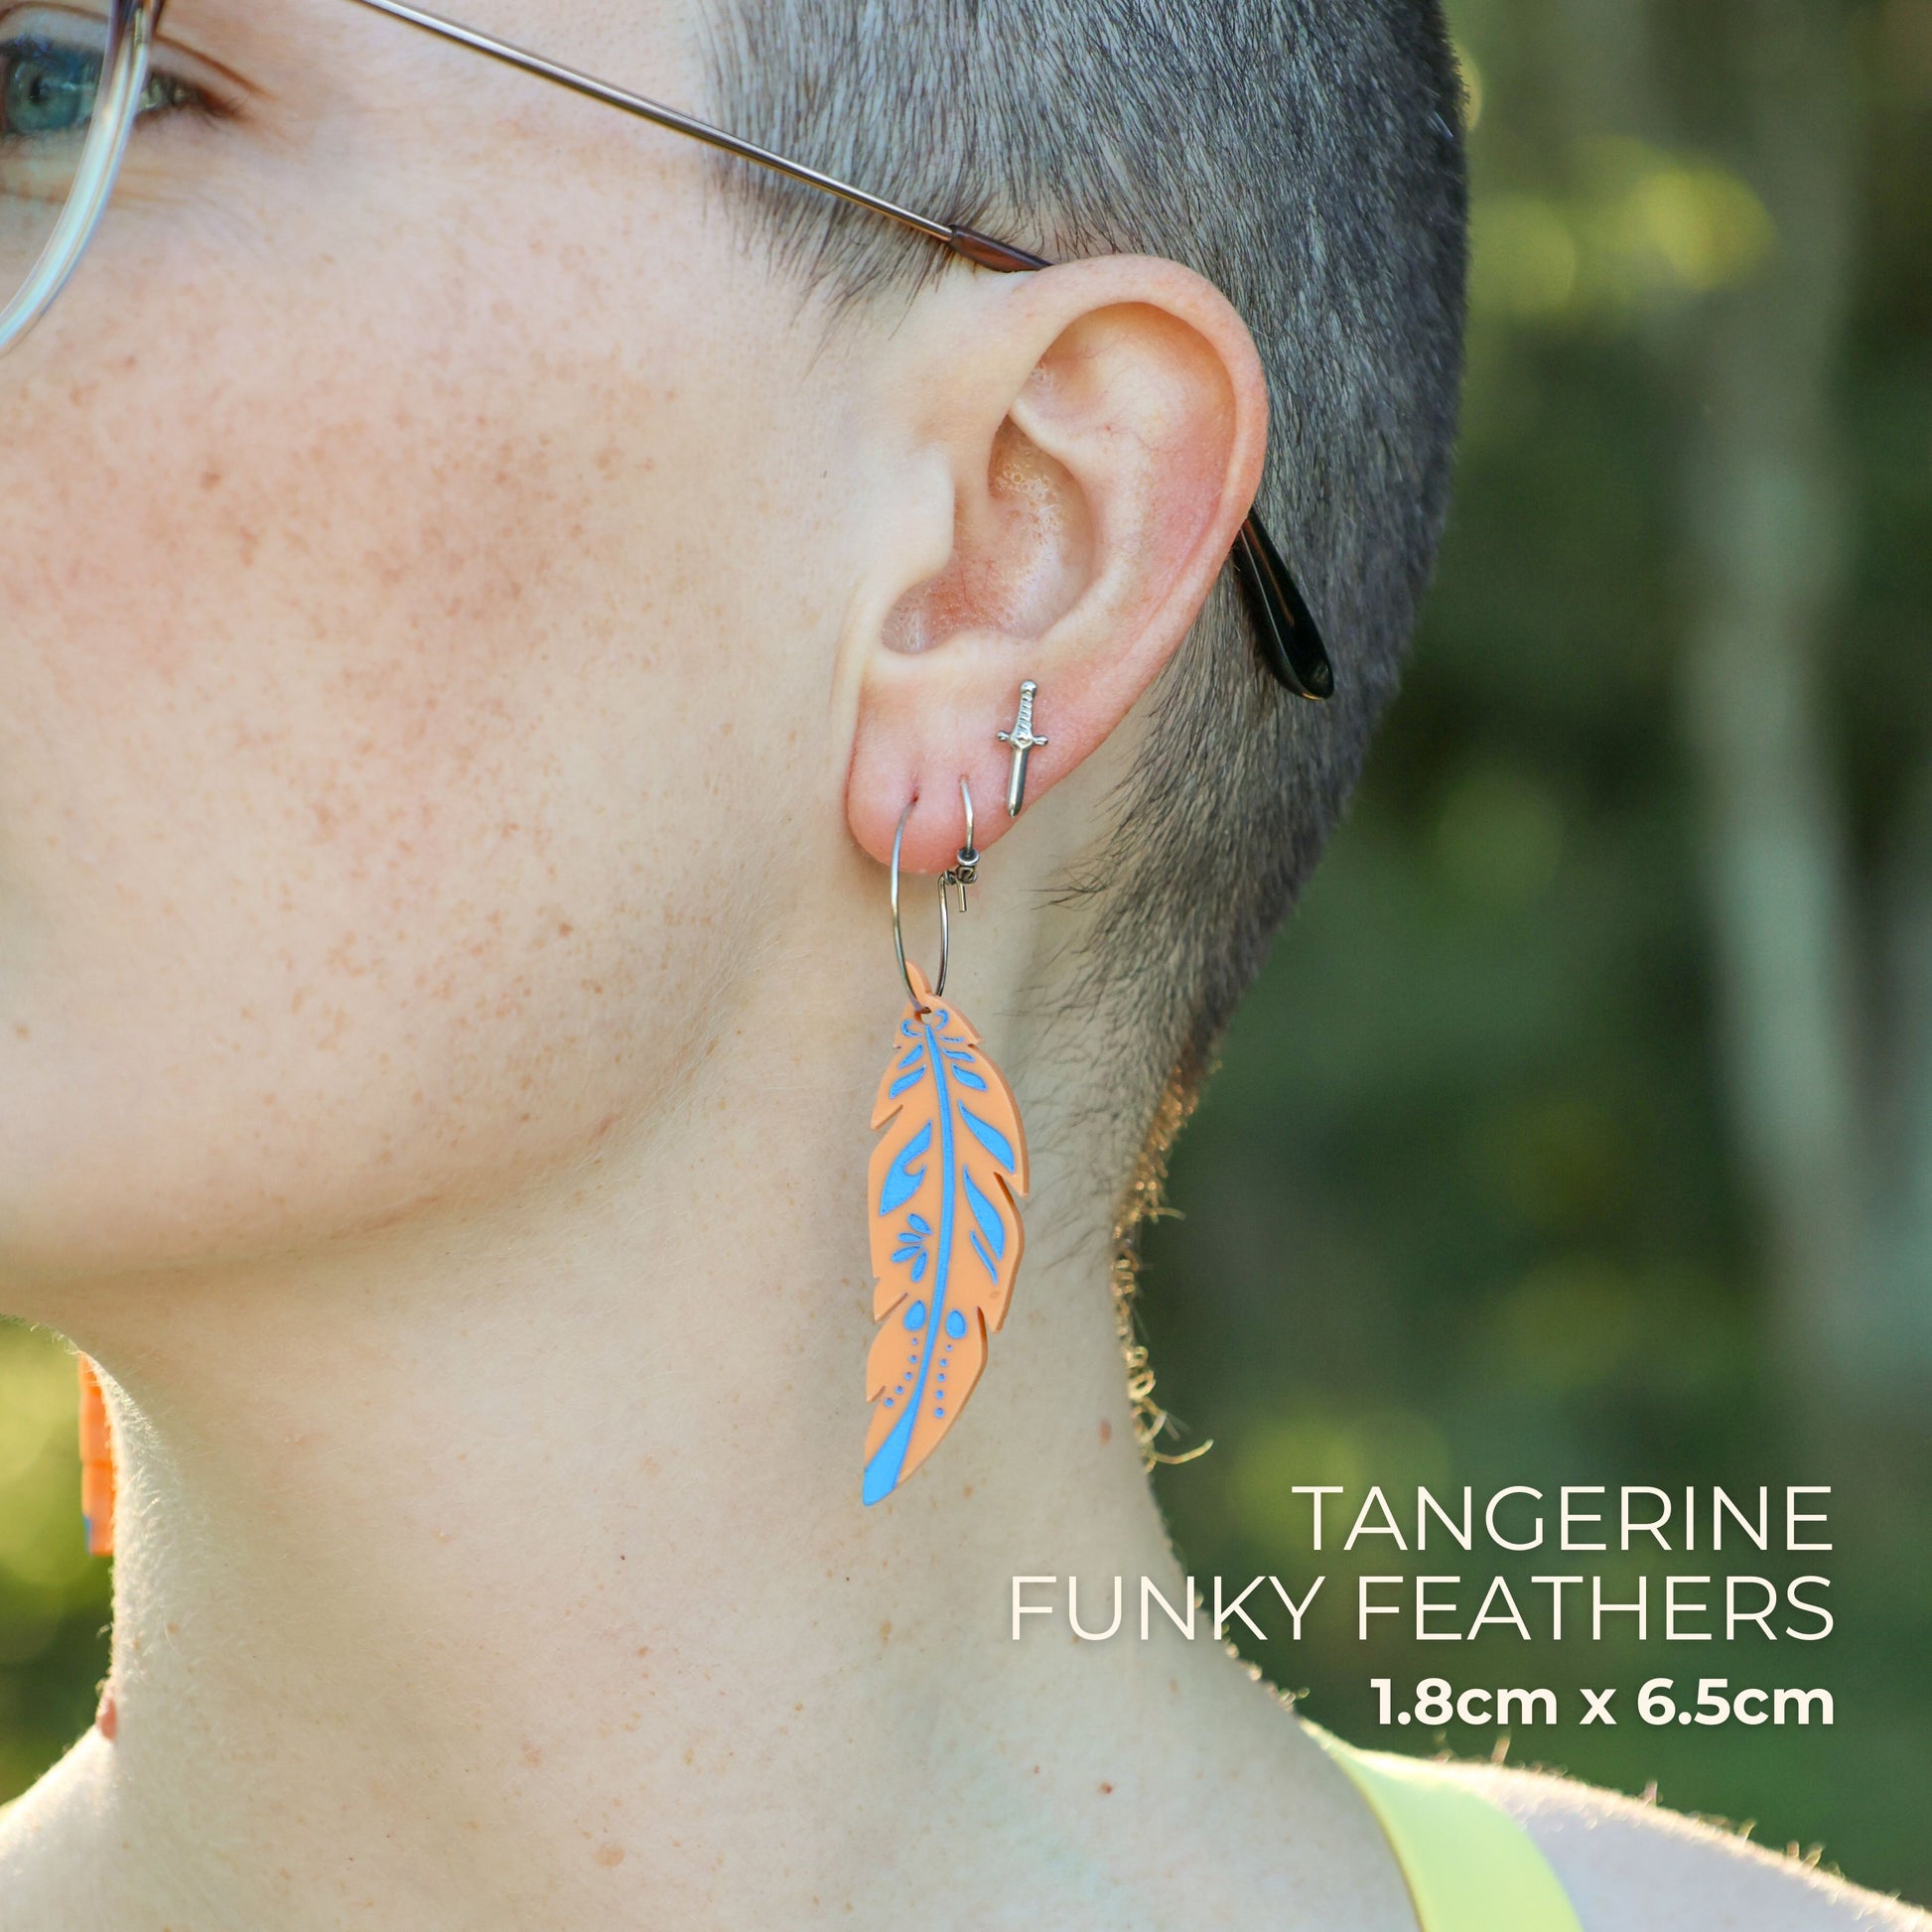 BINKABU Funky Feathers - Tangerine handmade acrylic bird earrings